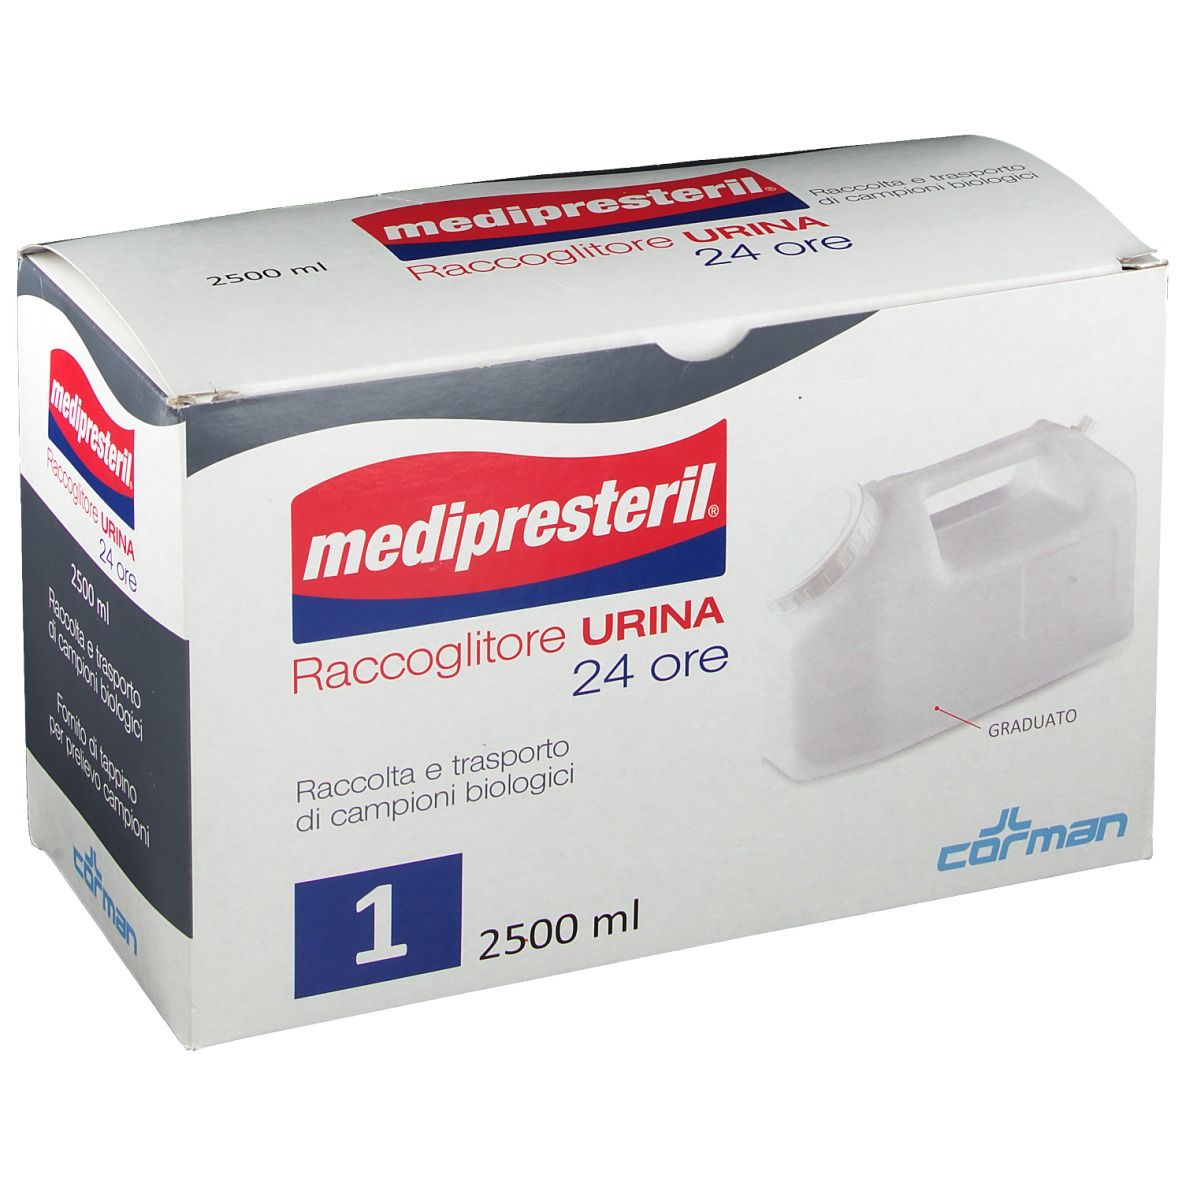 Medipresteril® Raccoglitore Urina 24 ore